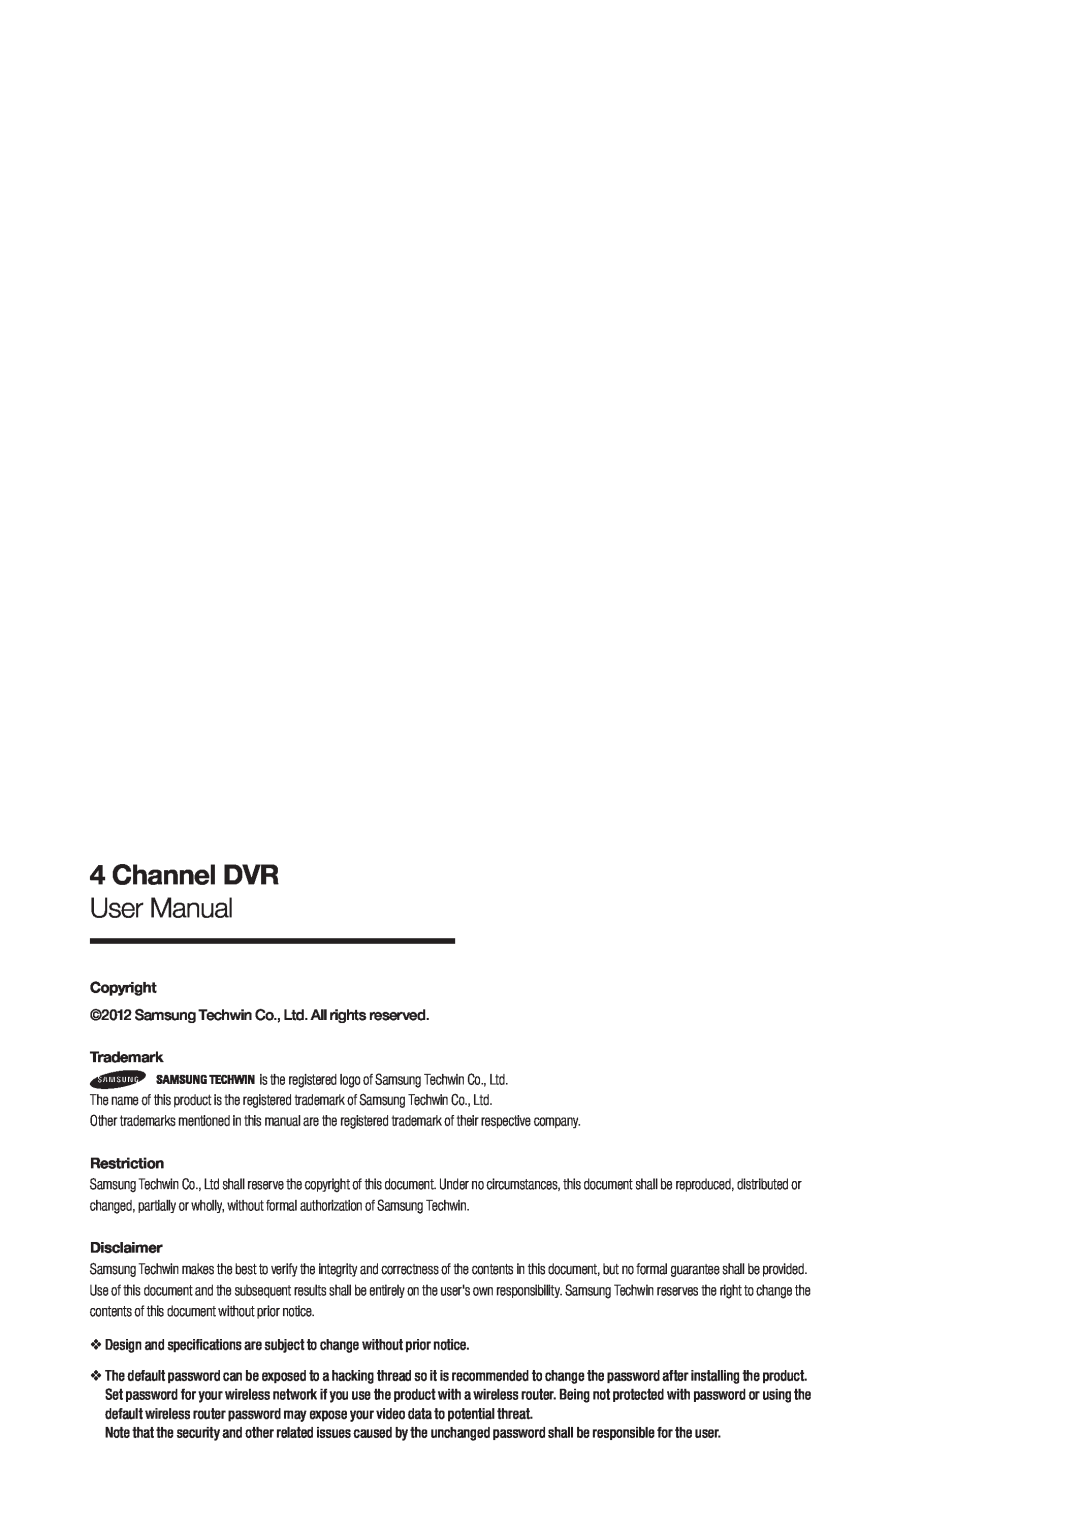 Samsung SDR3100 user manual Channel DVR, User Manual, Copyright, Trademark, Restriction, Disclaimer 